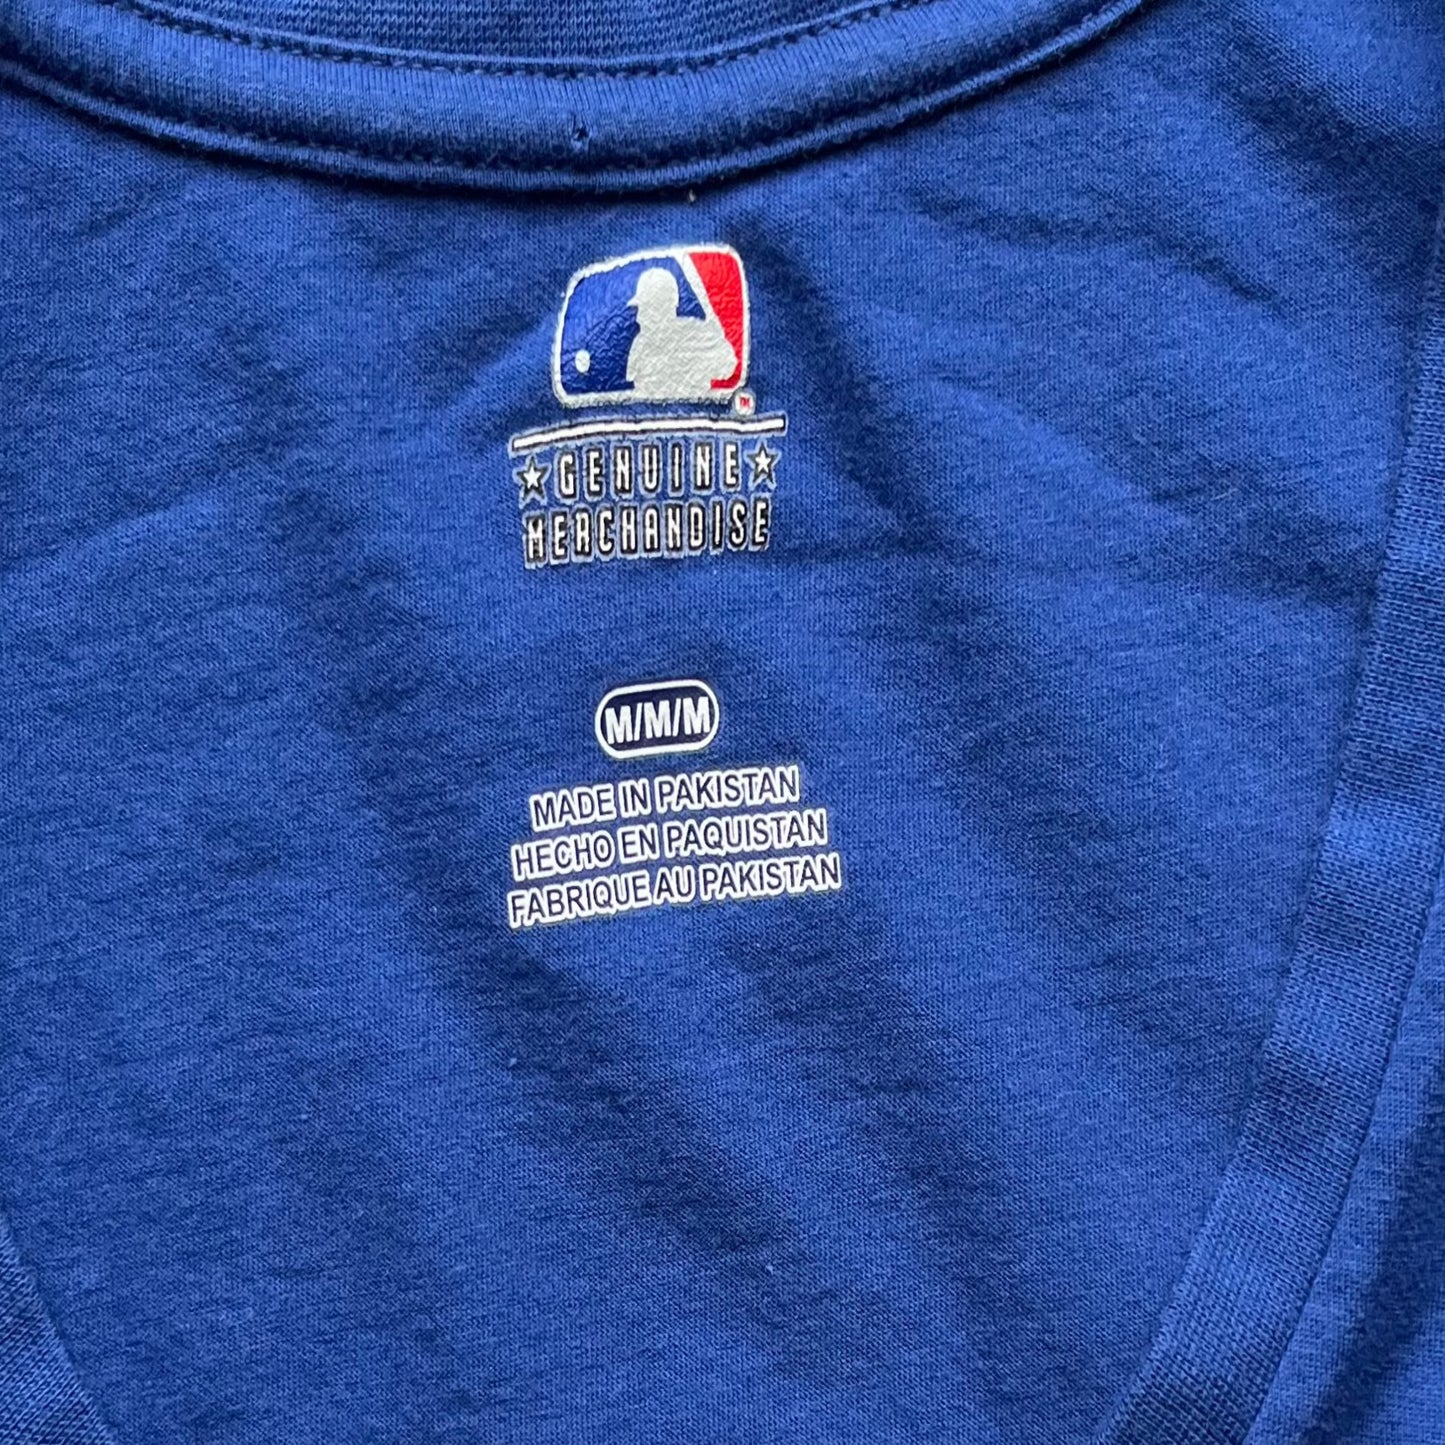 Texas Rangers - MLB - MLB Genuine Merchandise Tee (Medium)